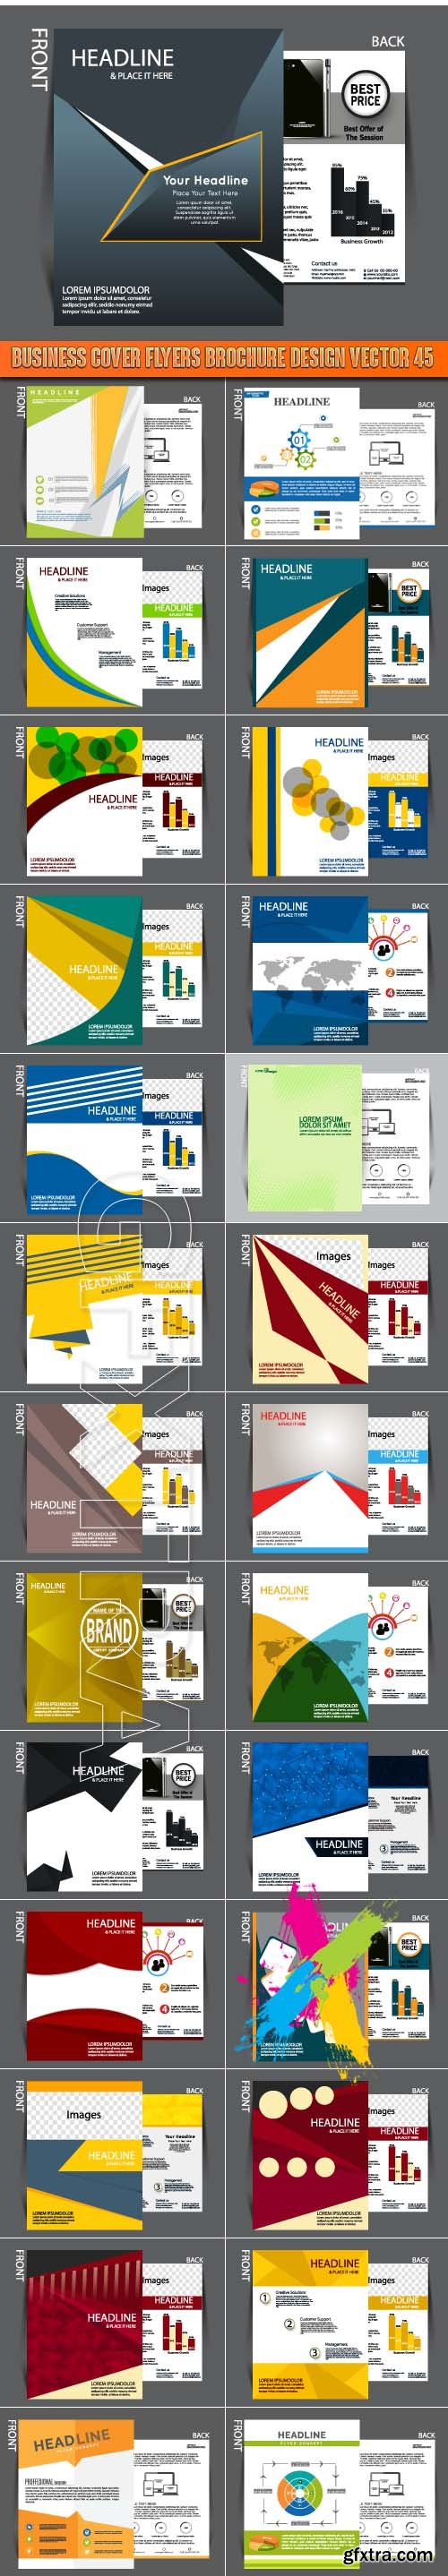 Business cover flyers brochure design vector 45